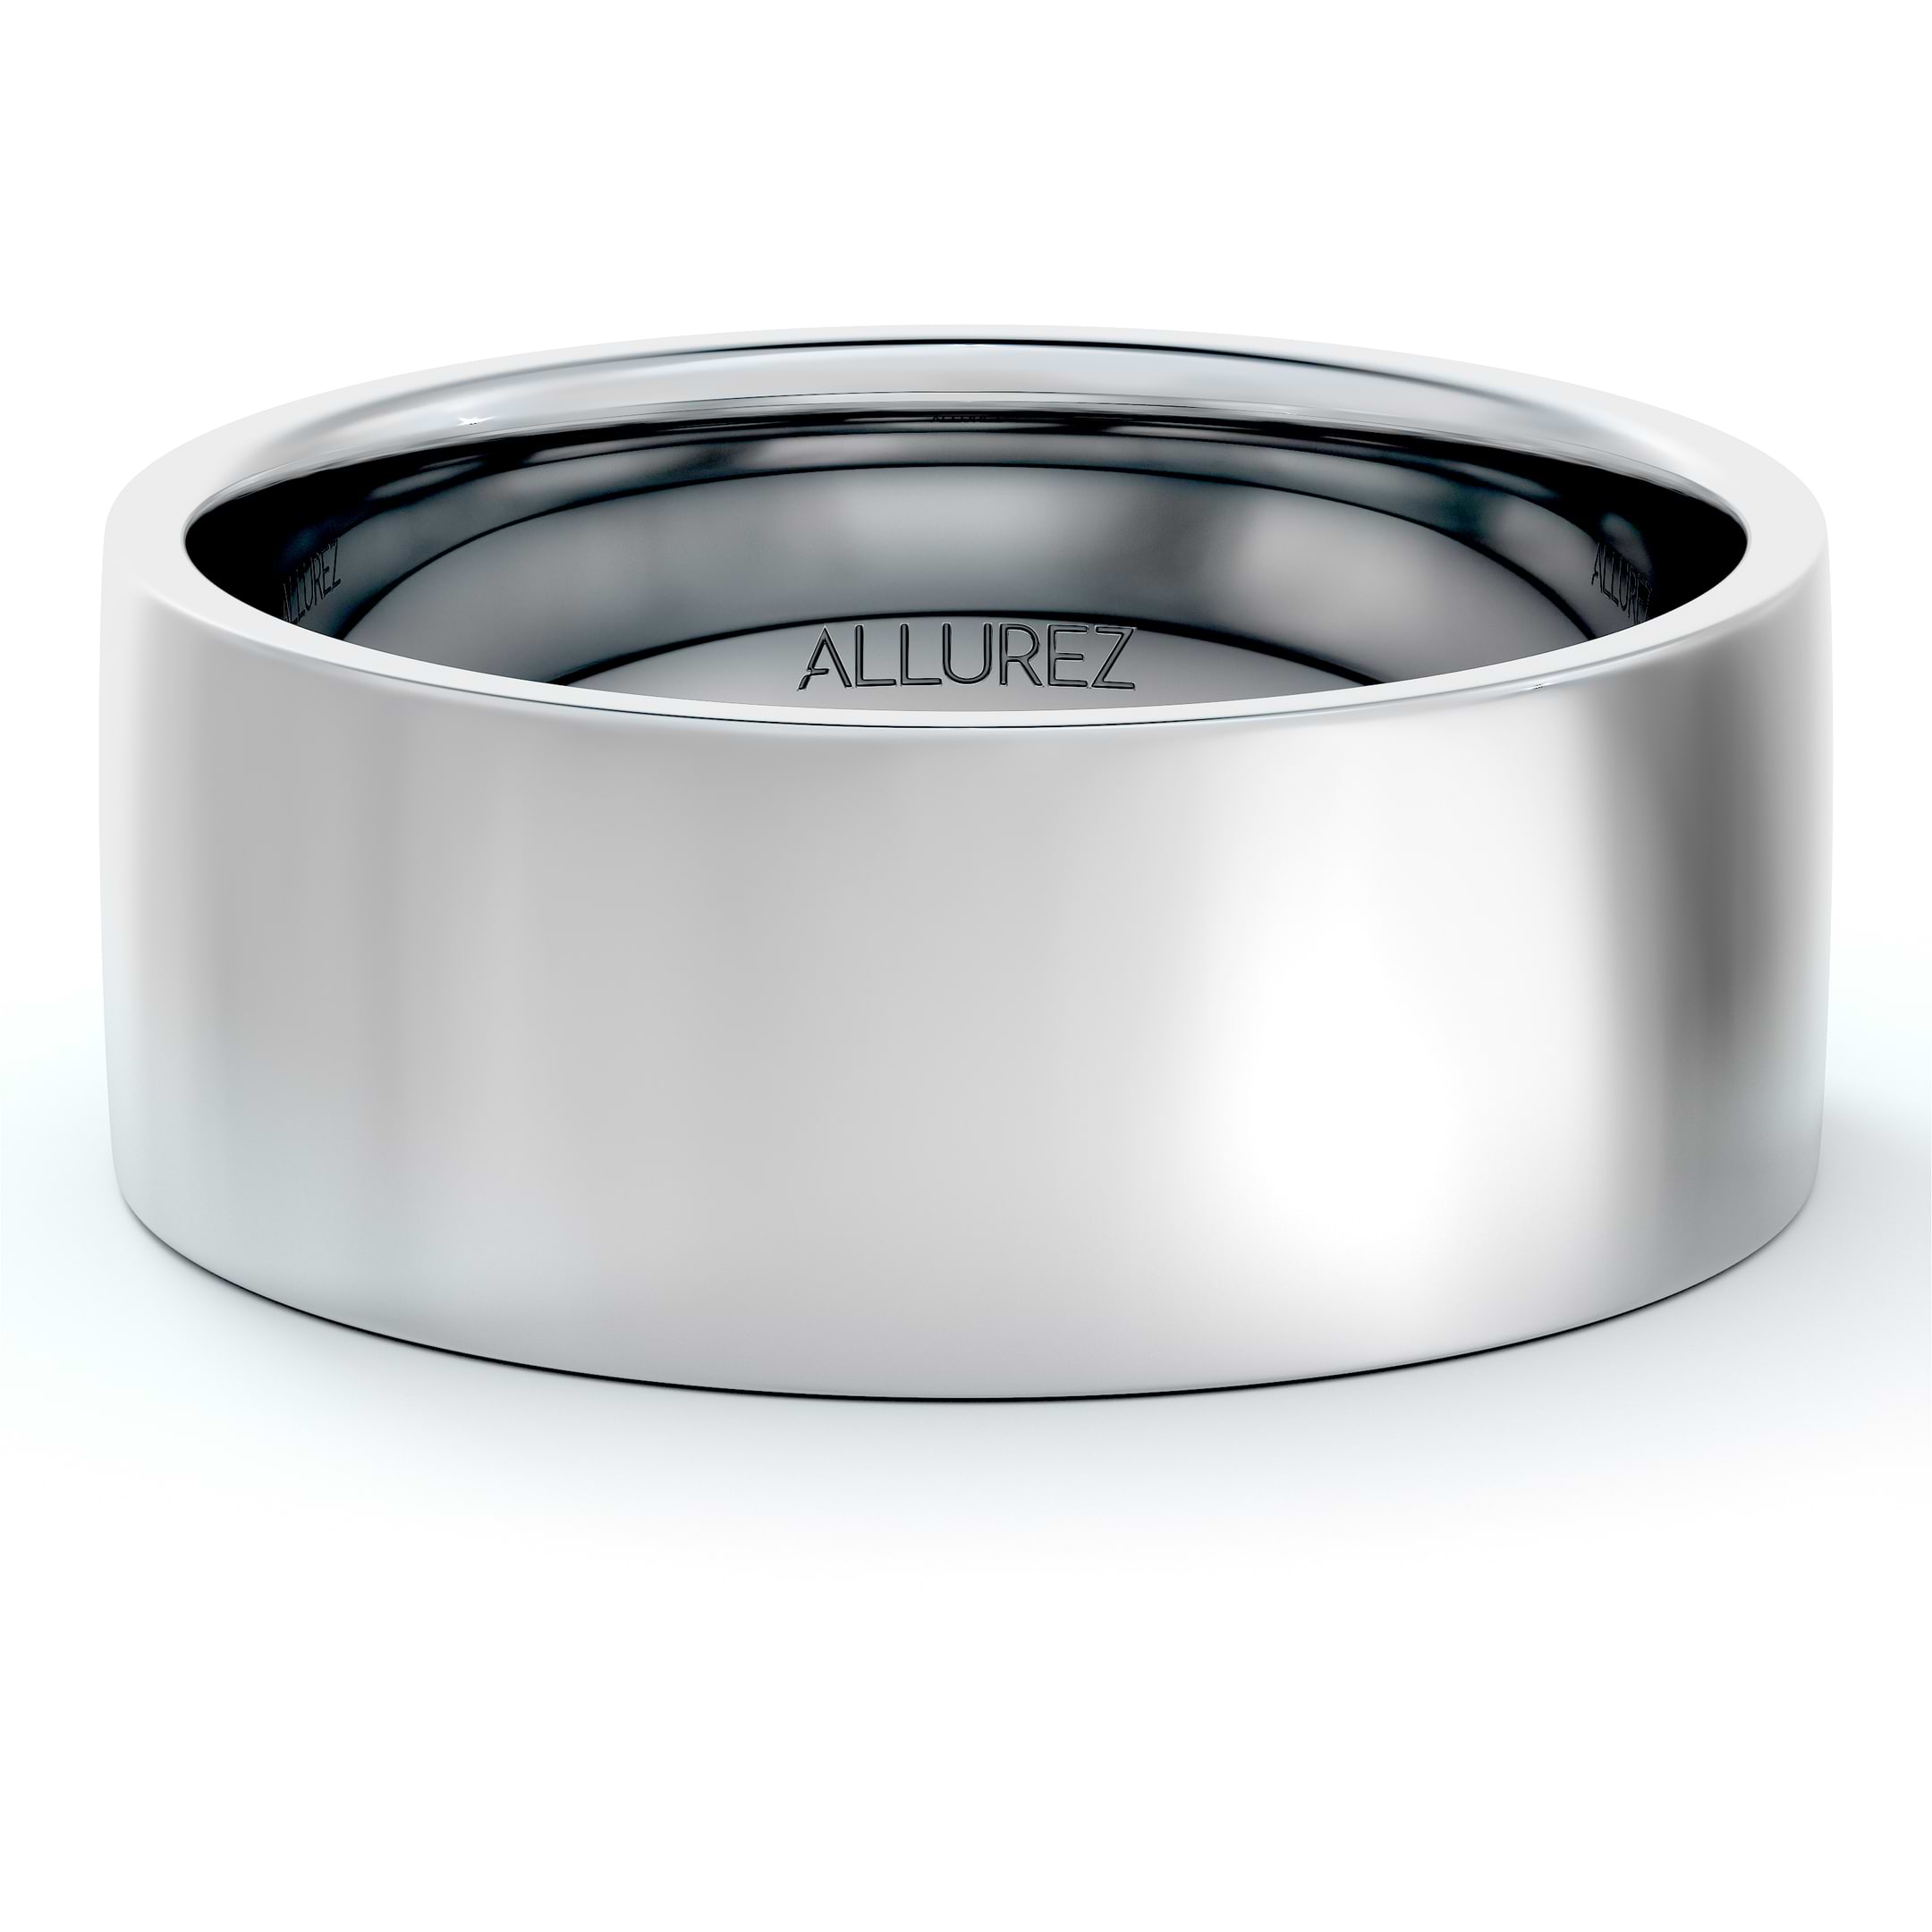 950 Platinum Plain Wedding Band Flat Comfort-Fit Ring (7 mm)